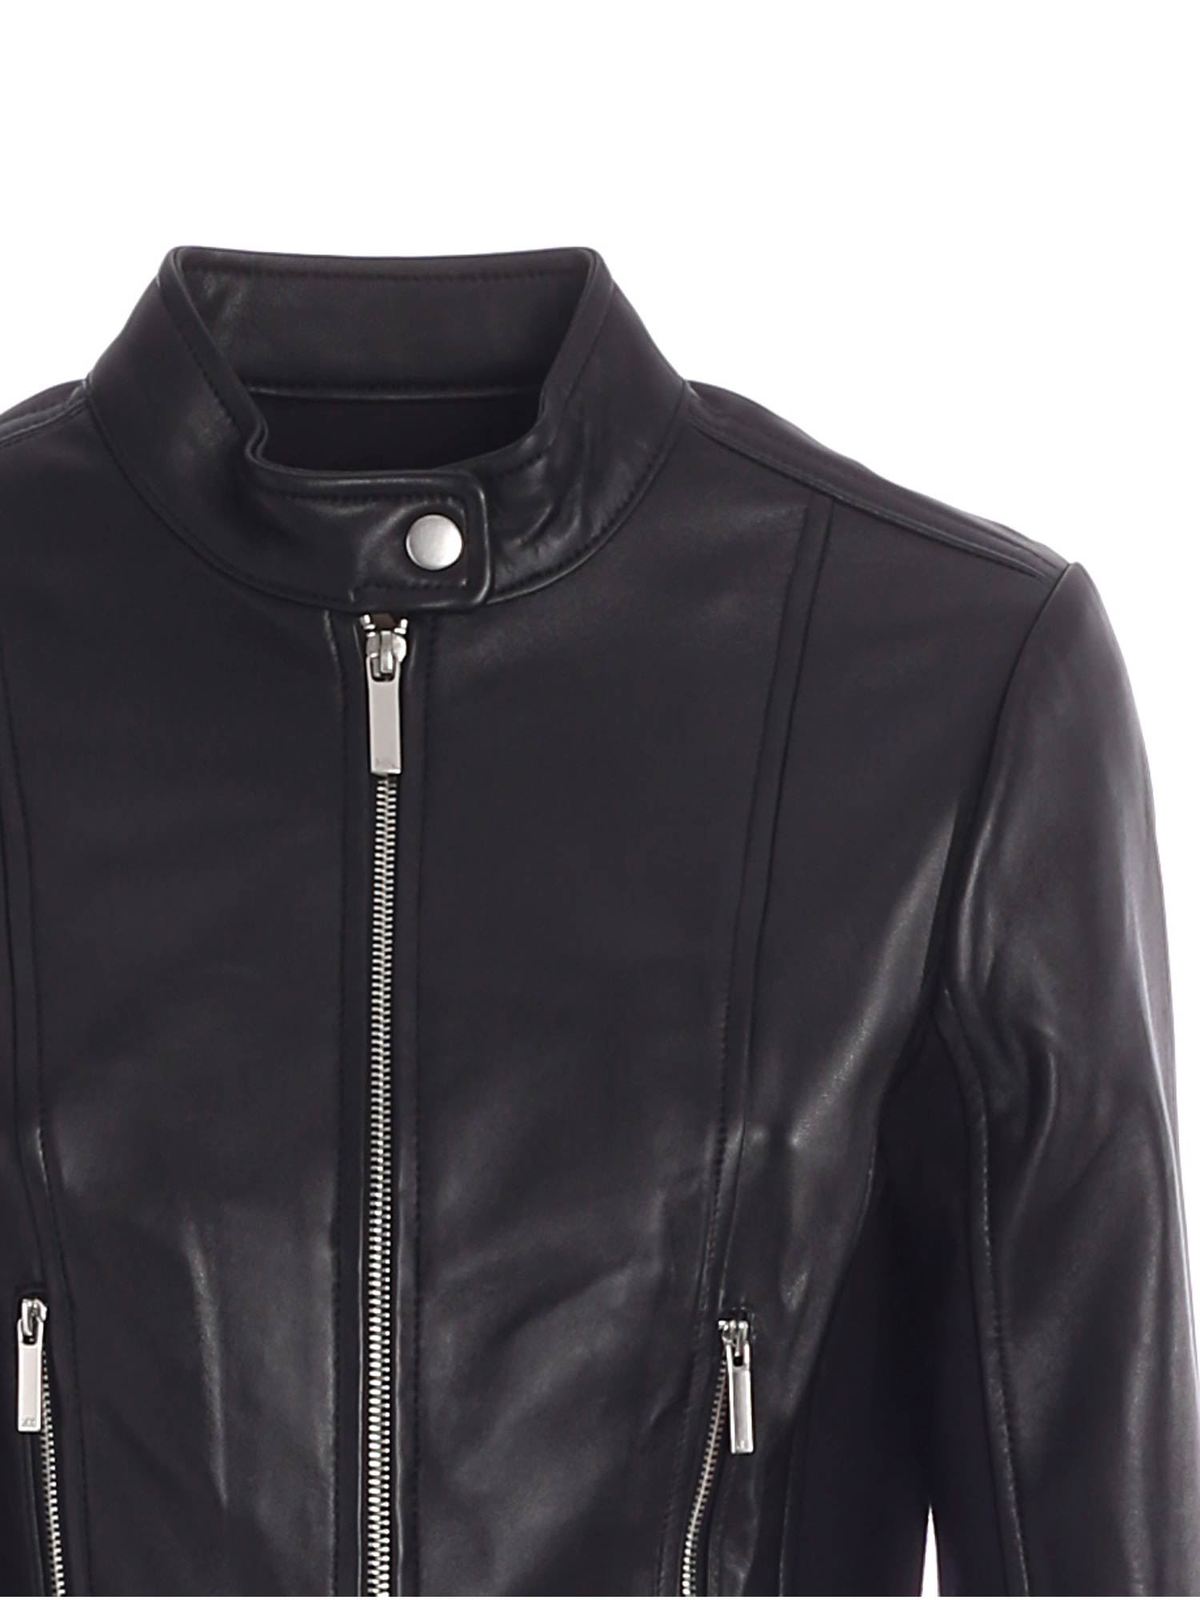 Michael Kors Leather Belted Moto Jacket Created for Macys  Macys